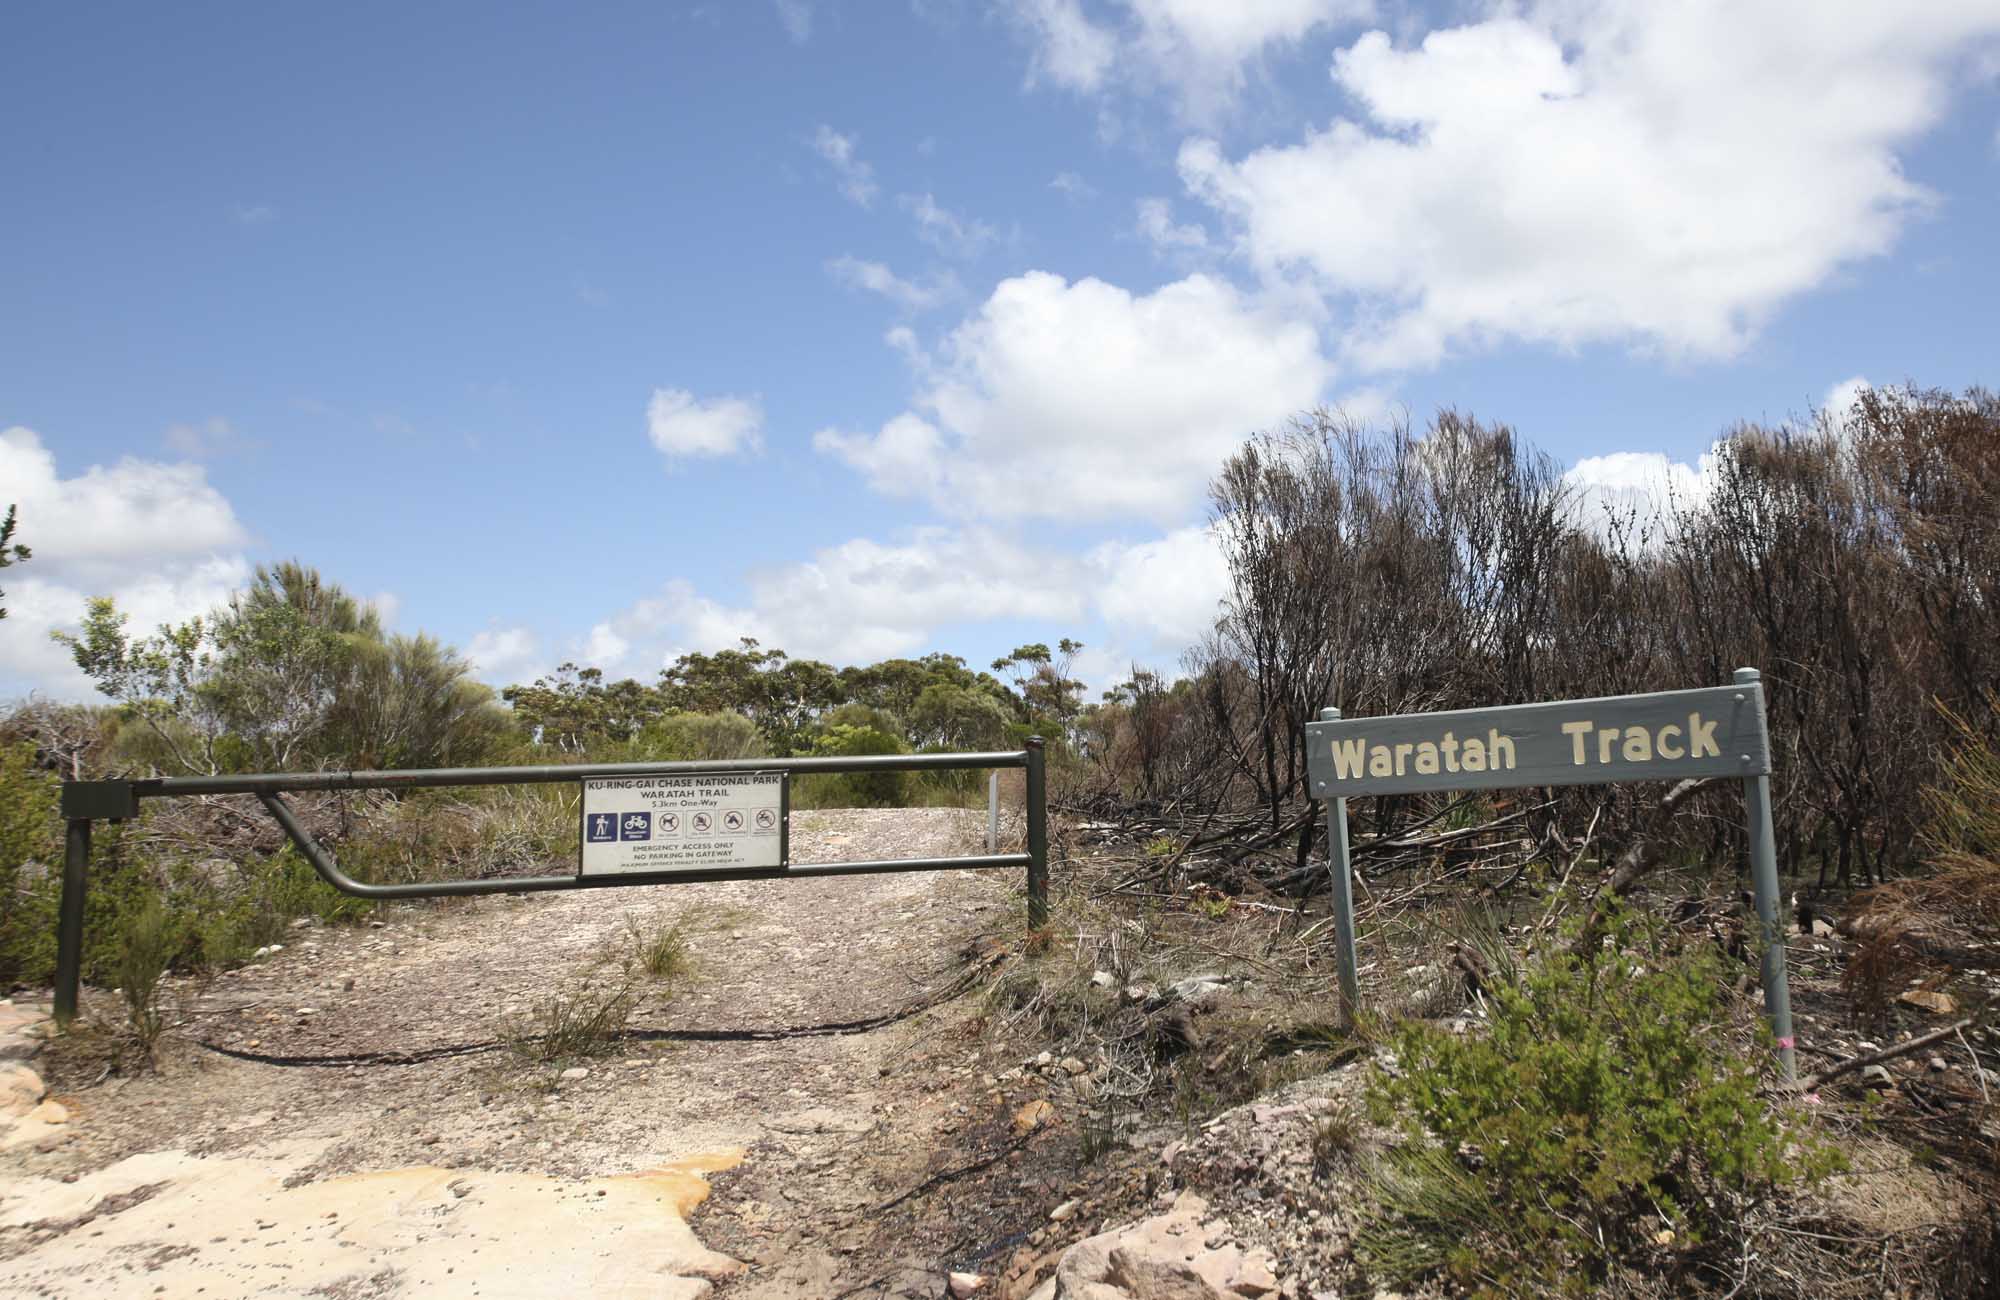 Waratah track, Ku-ring-gai Chase National Park. Photo: Andy Richards/NSW Government